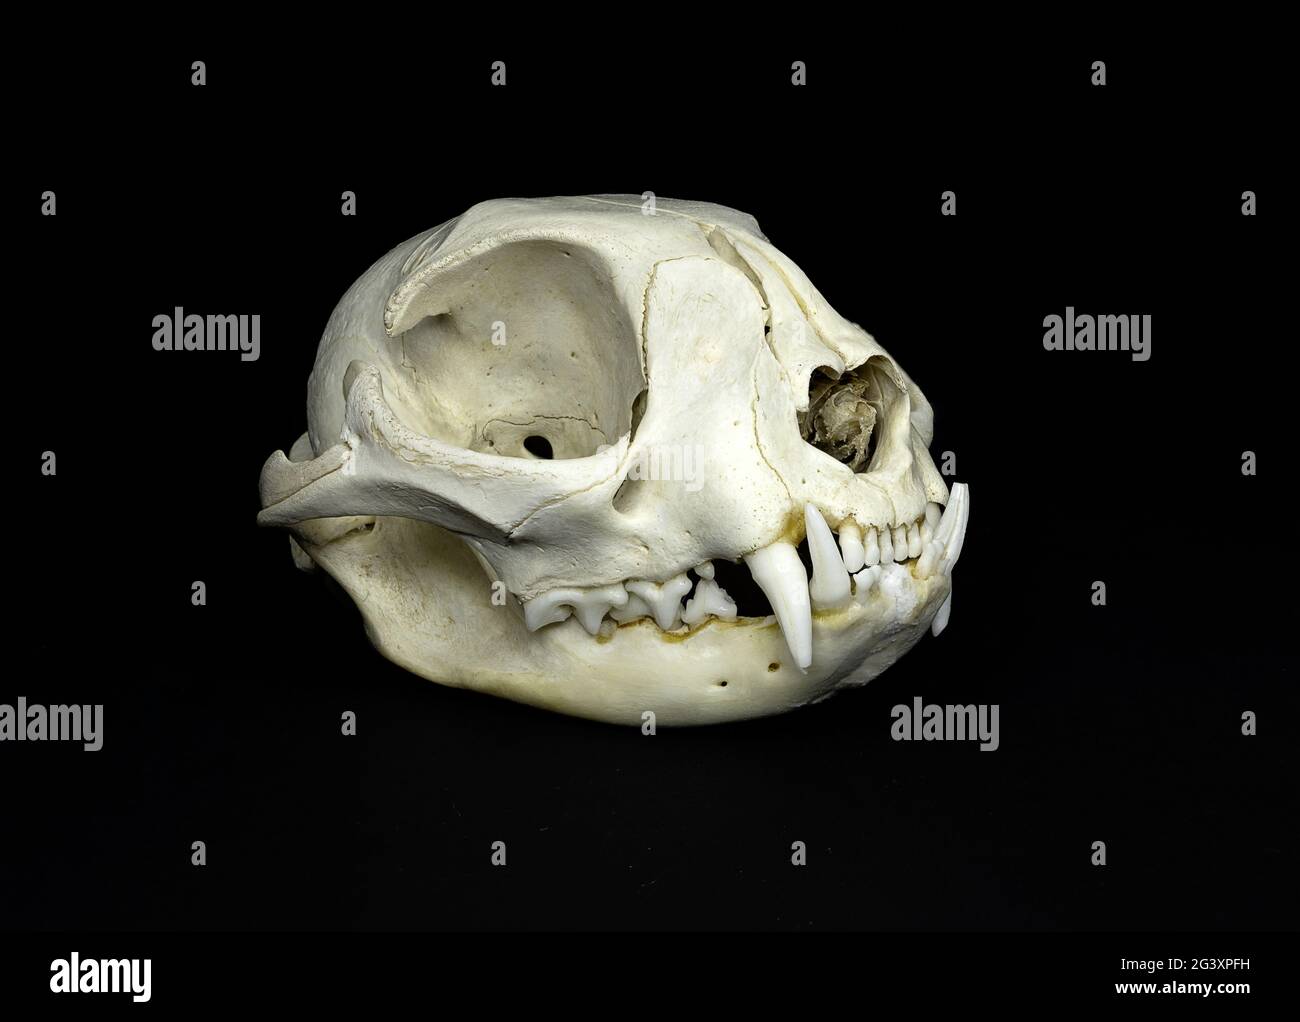 Cráneo aislado de un felino, un gato doméstico, totalmente carnal sobre un  fondo negro Fotografía de stock - Alamy